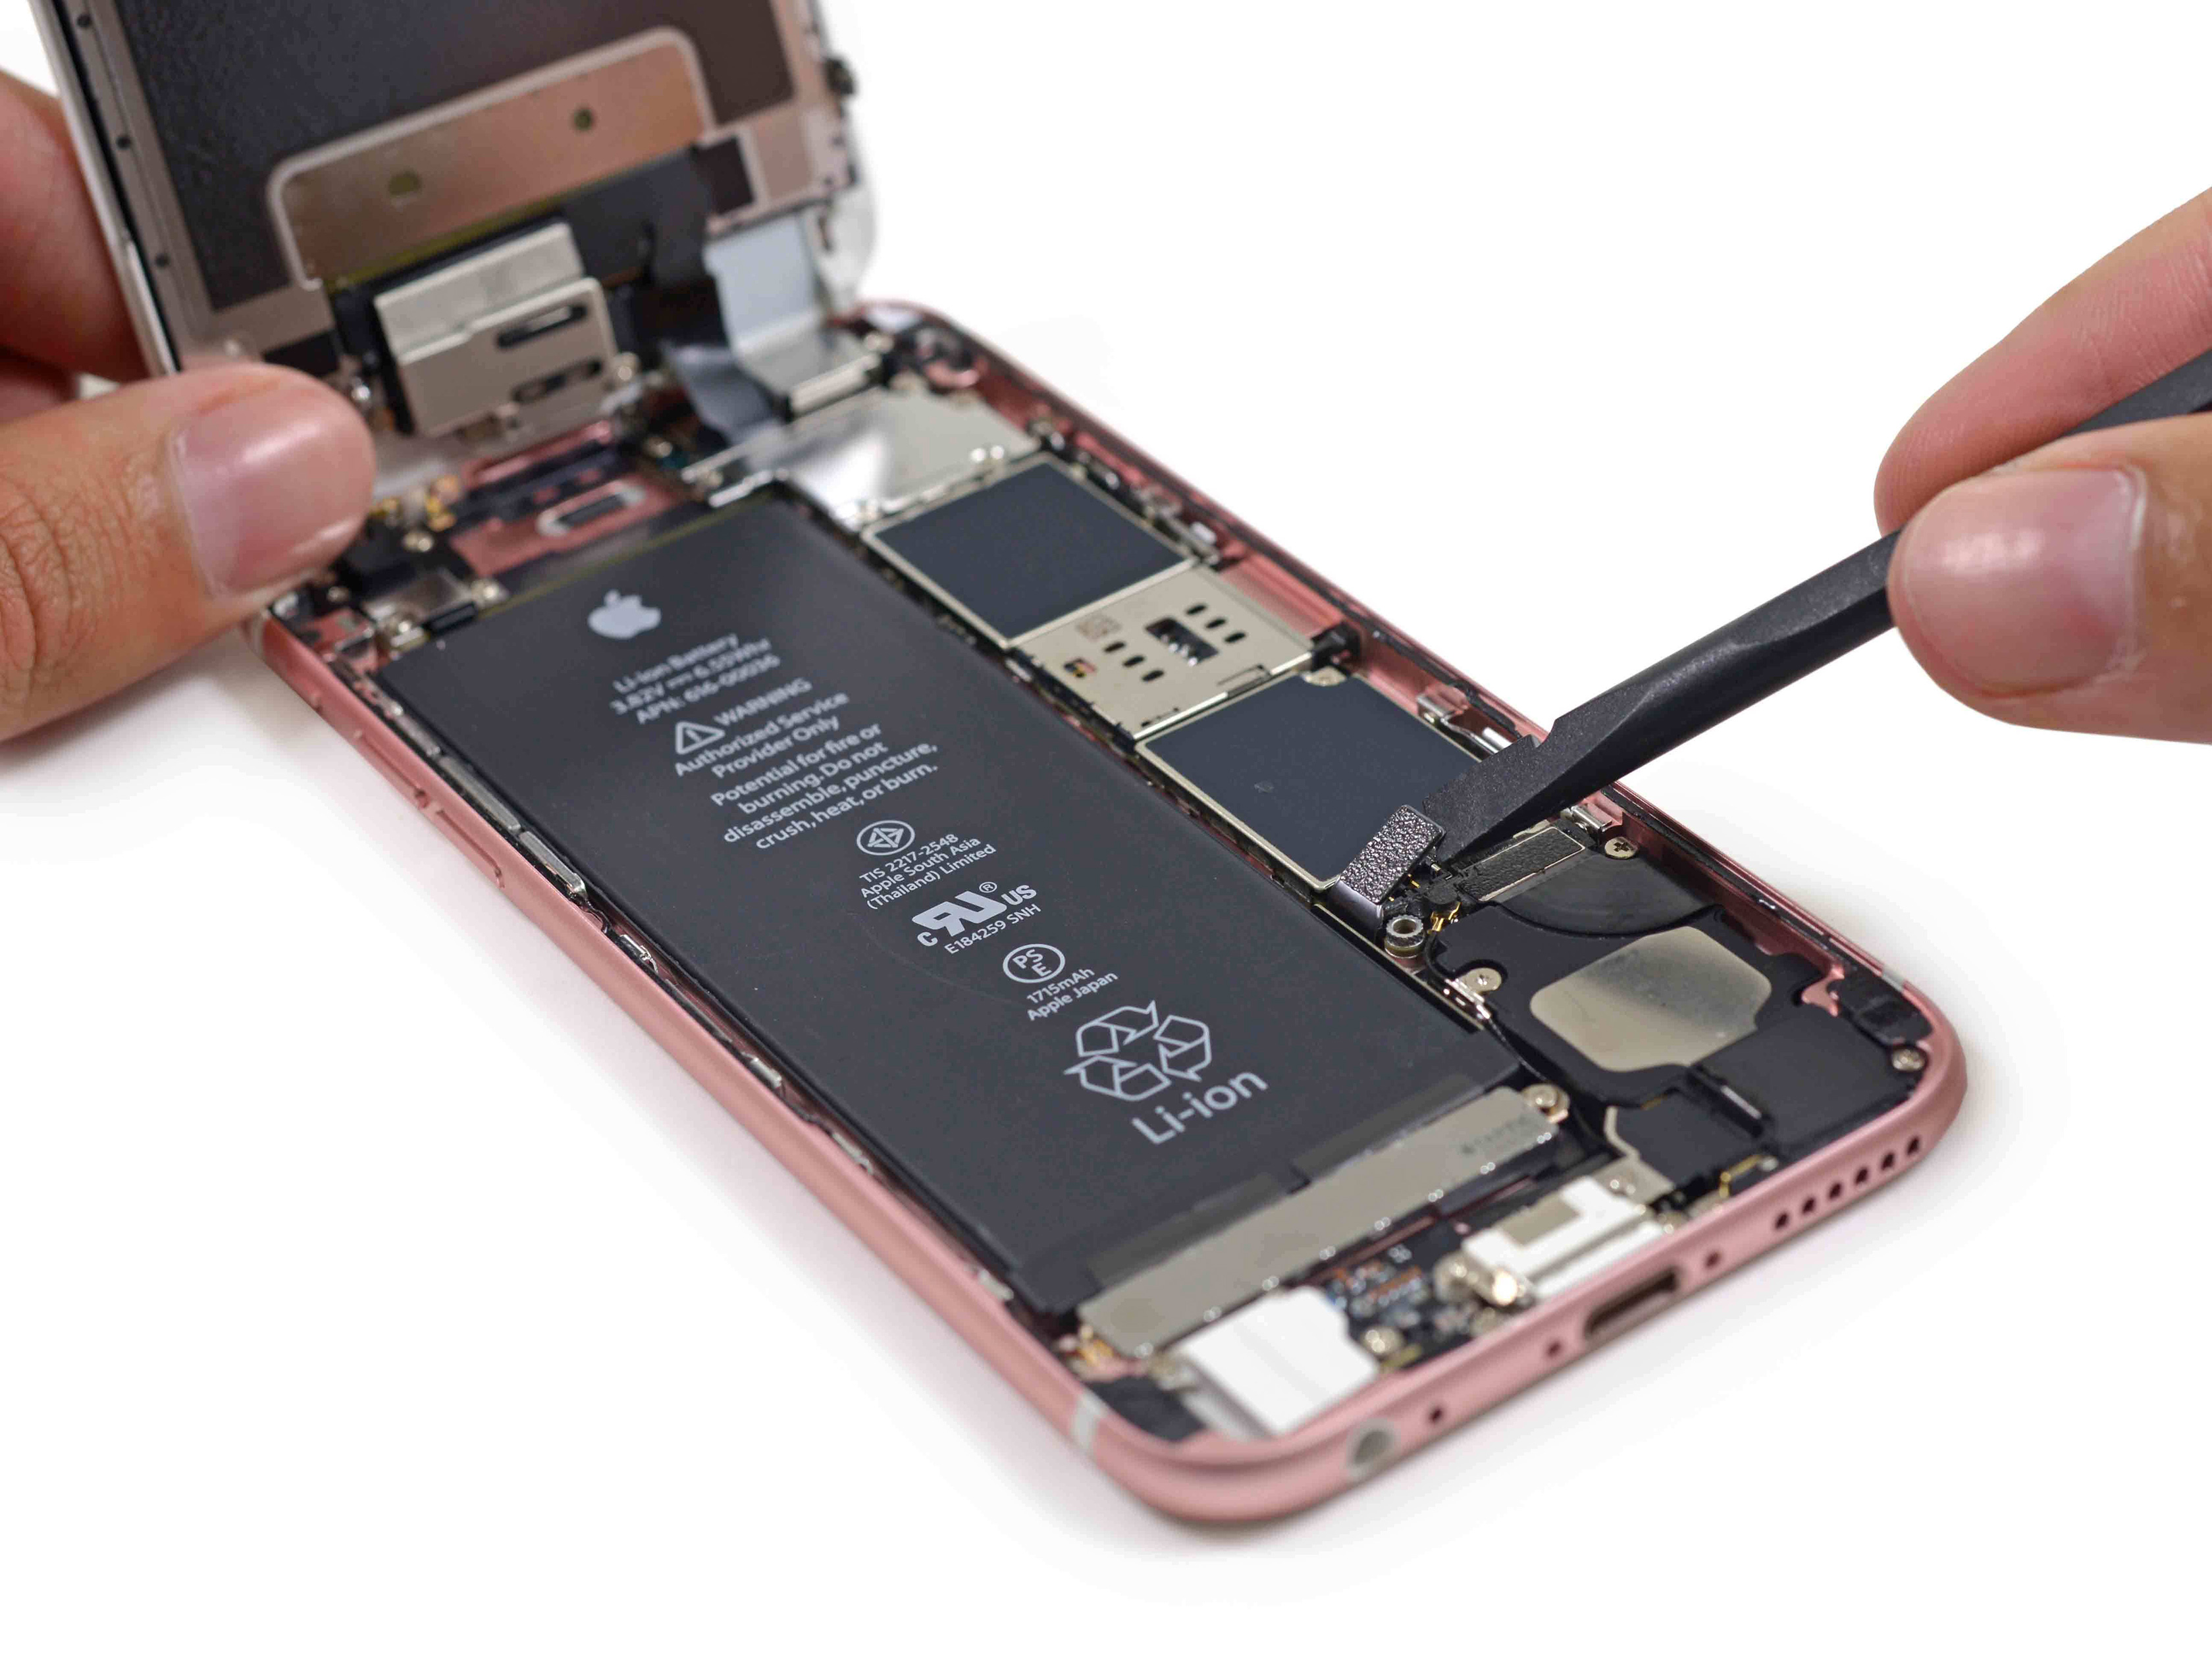 iPhone 6s desmontado pela iFixit